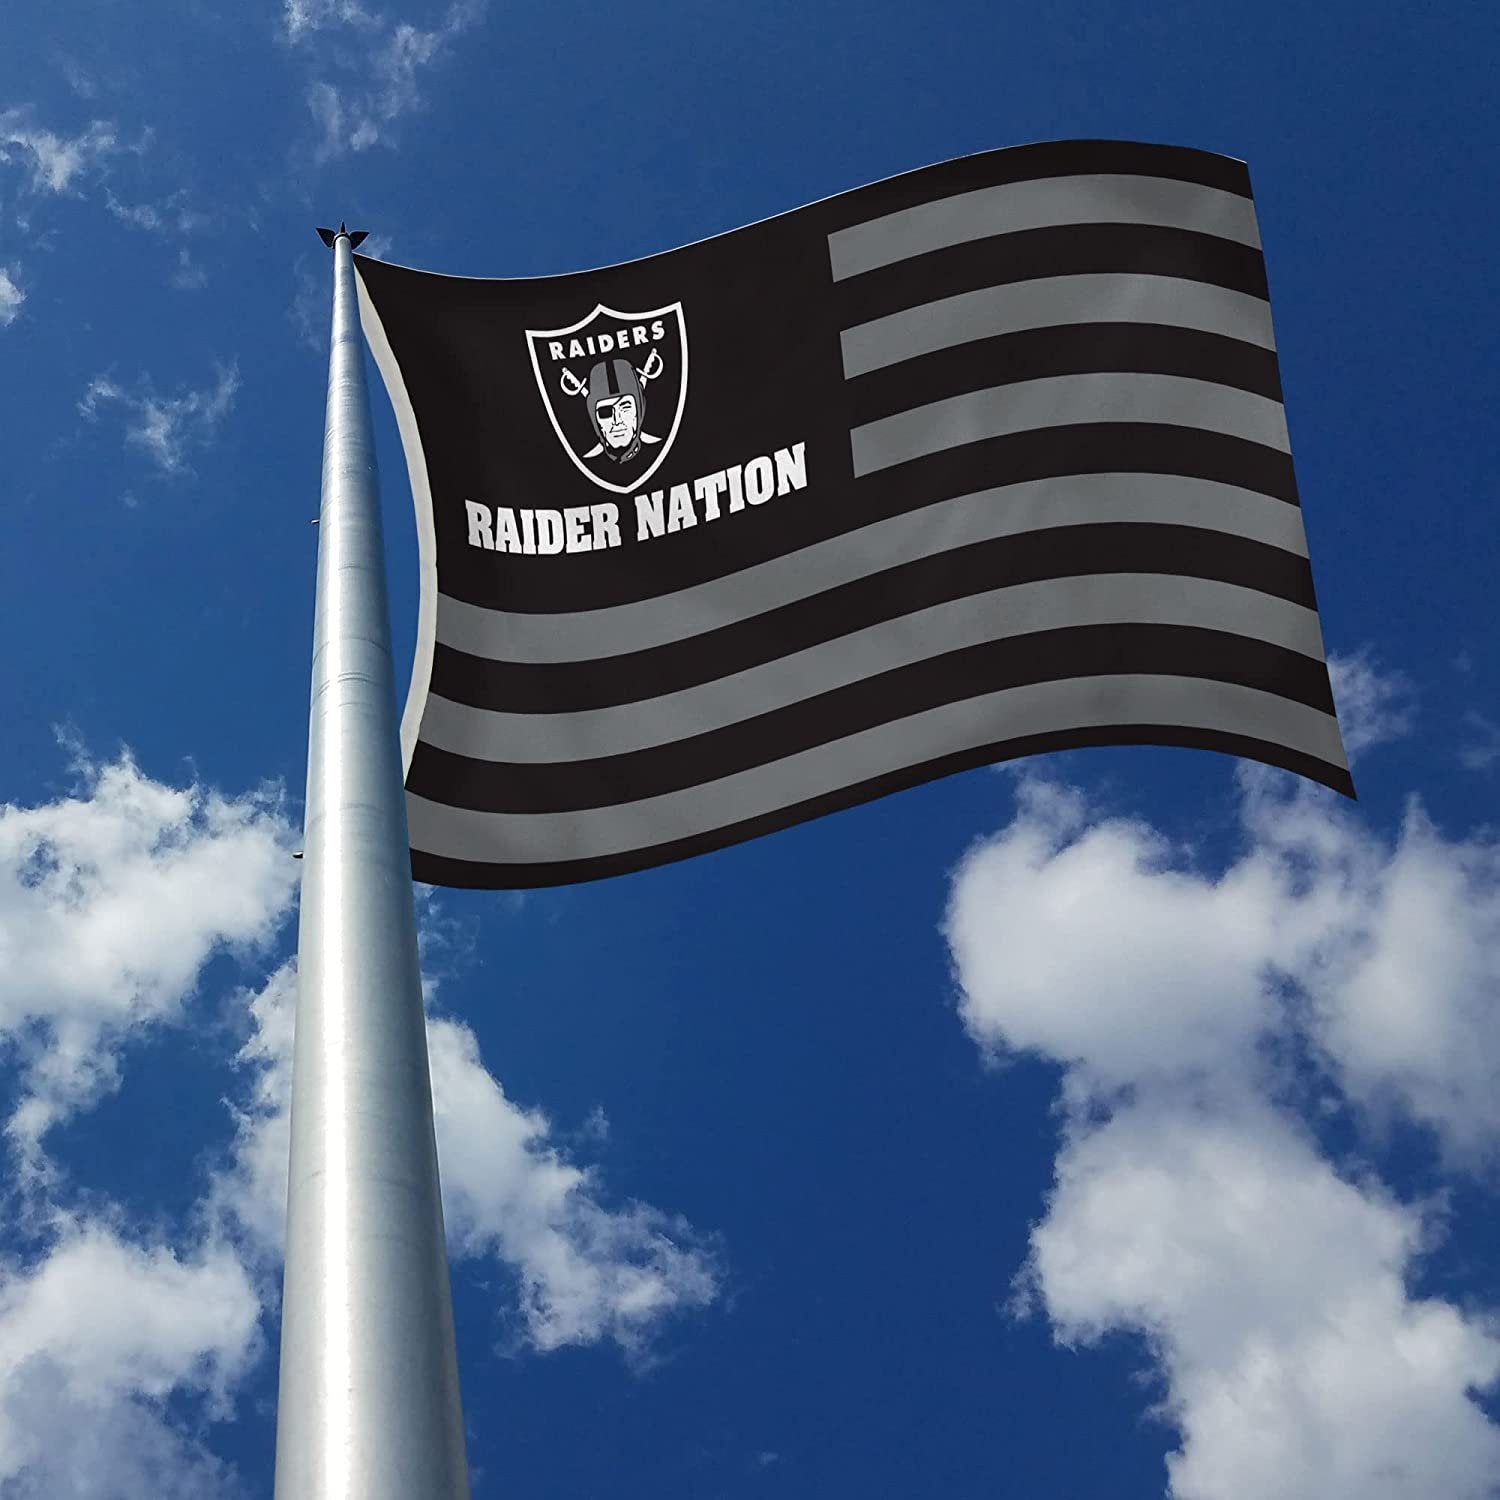 Las Vegas Raiders Premium 3x5 Feet Flag Banner, Team Flag Design, Outdoor Indoor Use, Single Sided